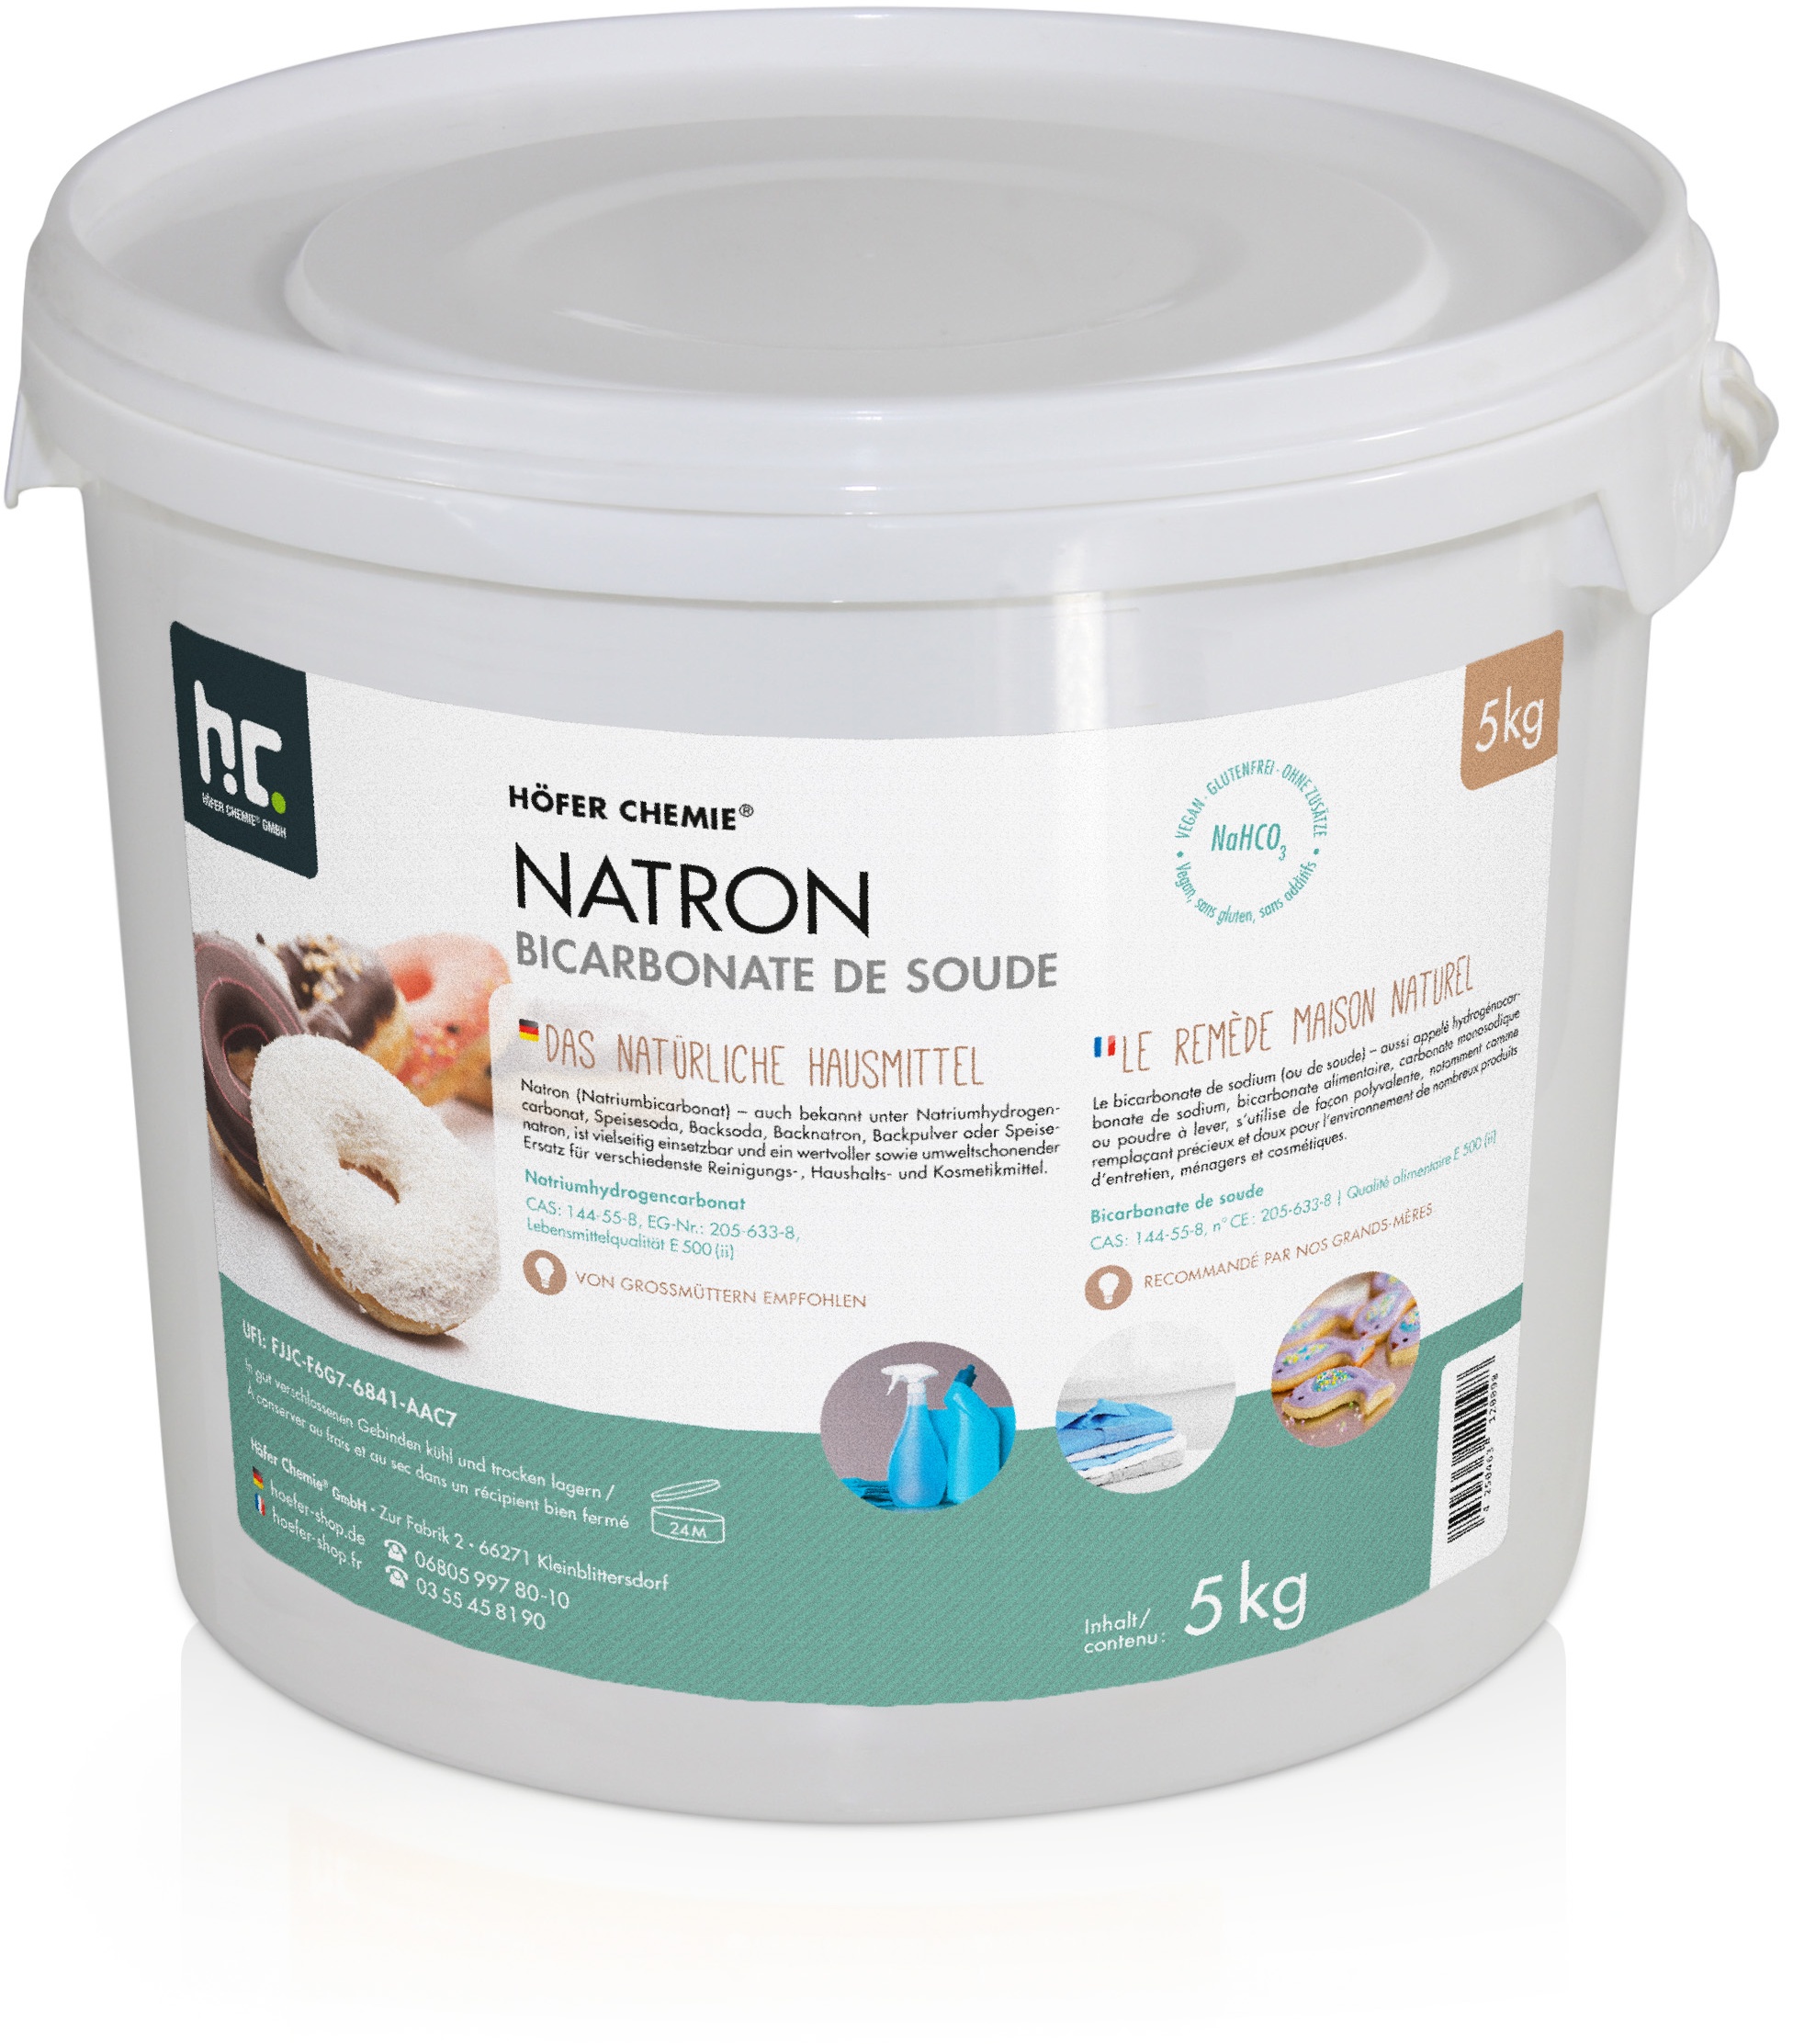 2 x 5 kg Natron Backsoda Natriumhydrogencarbonat in Lebensmittelqualität